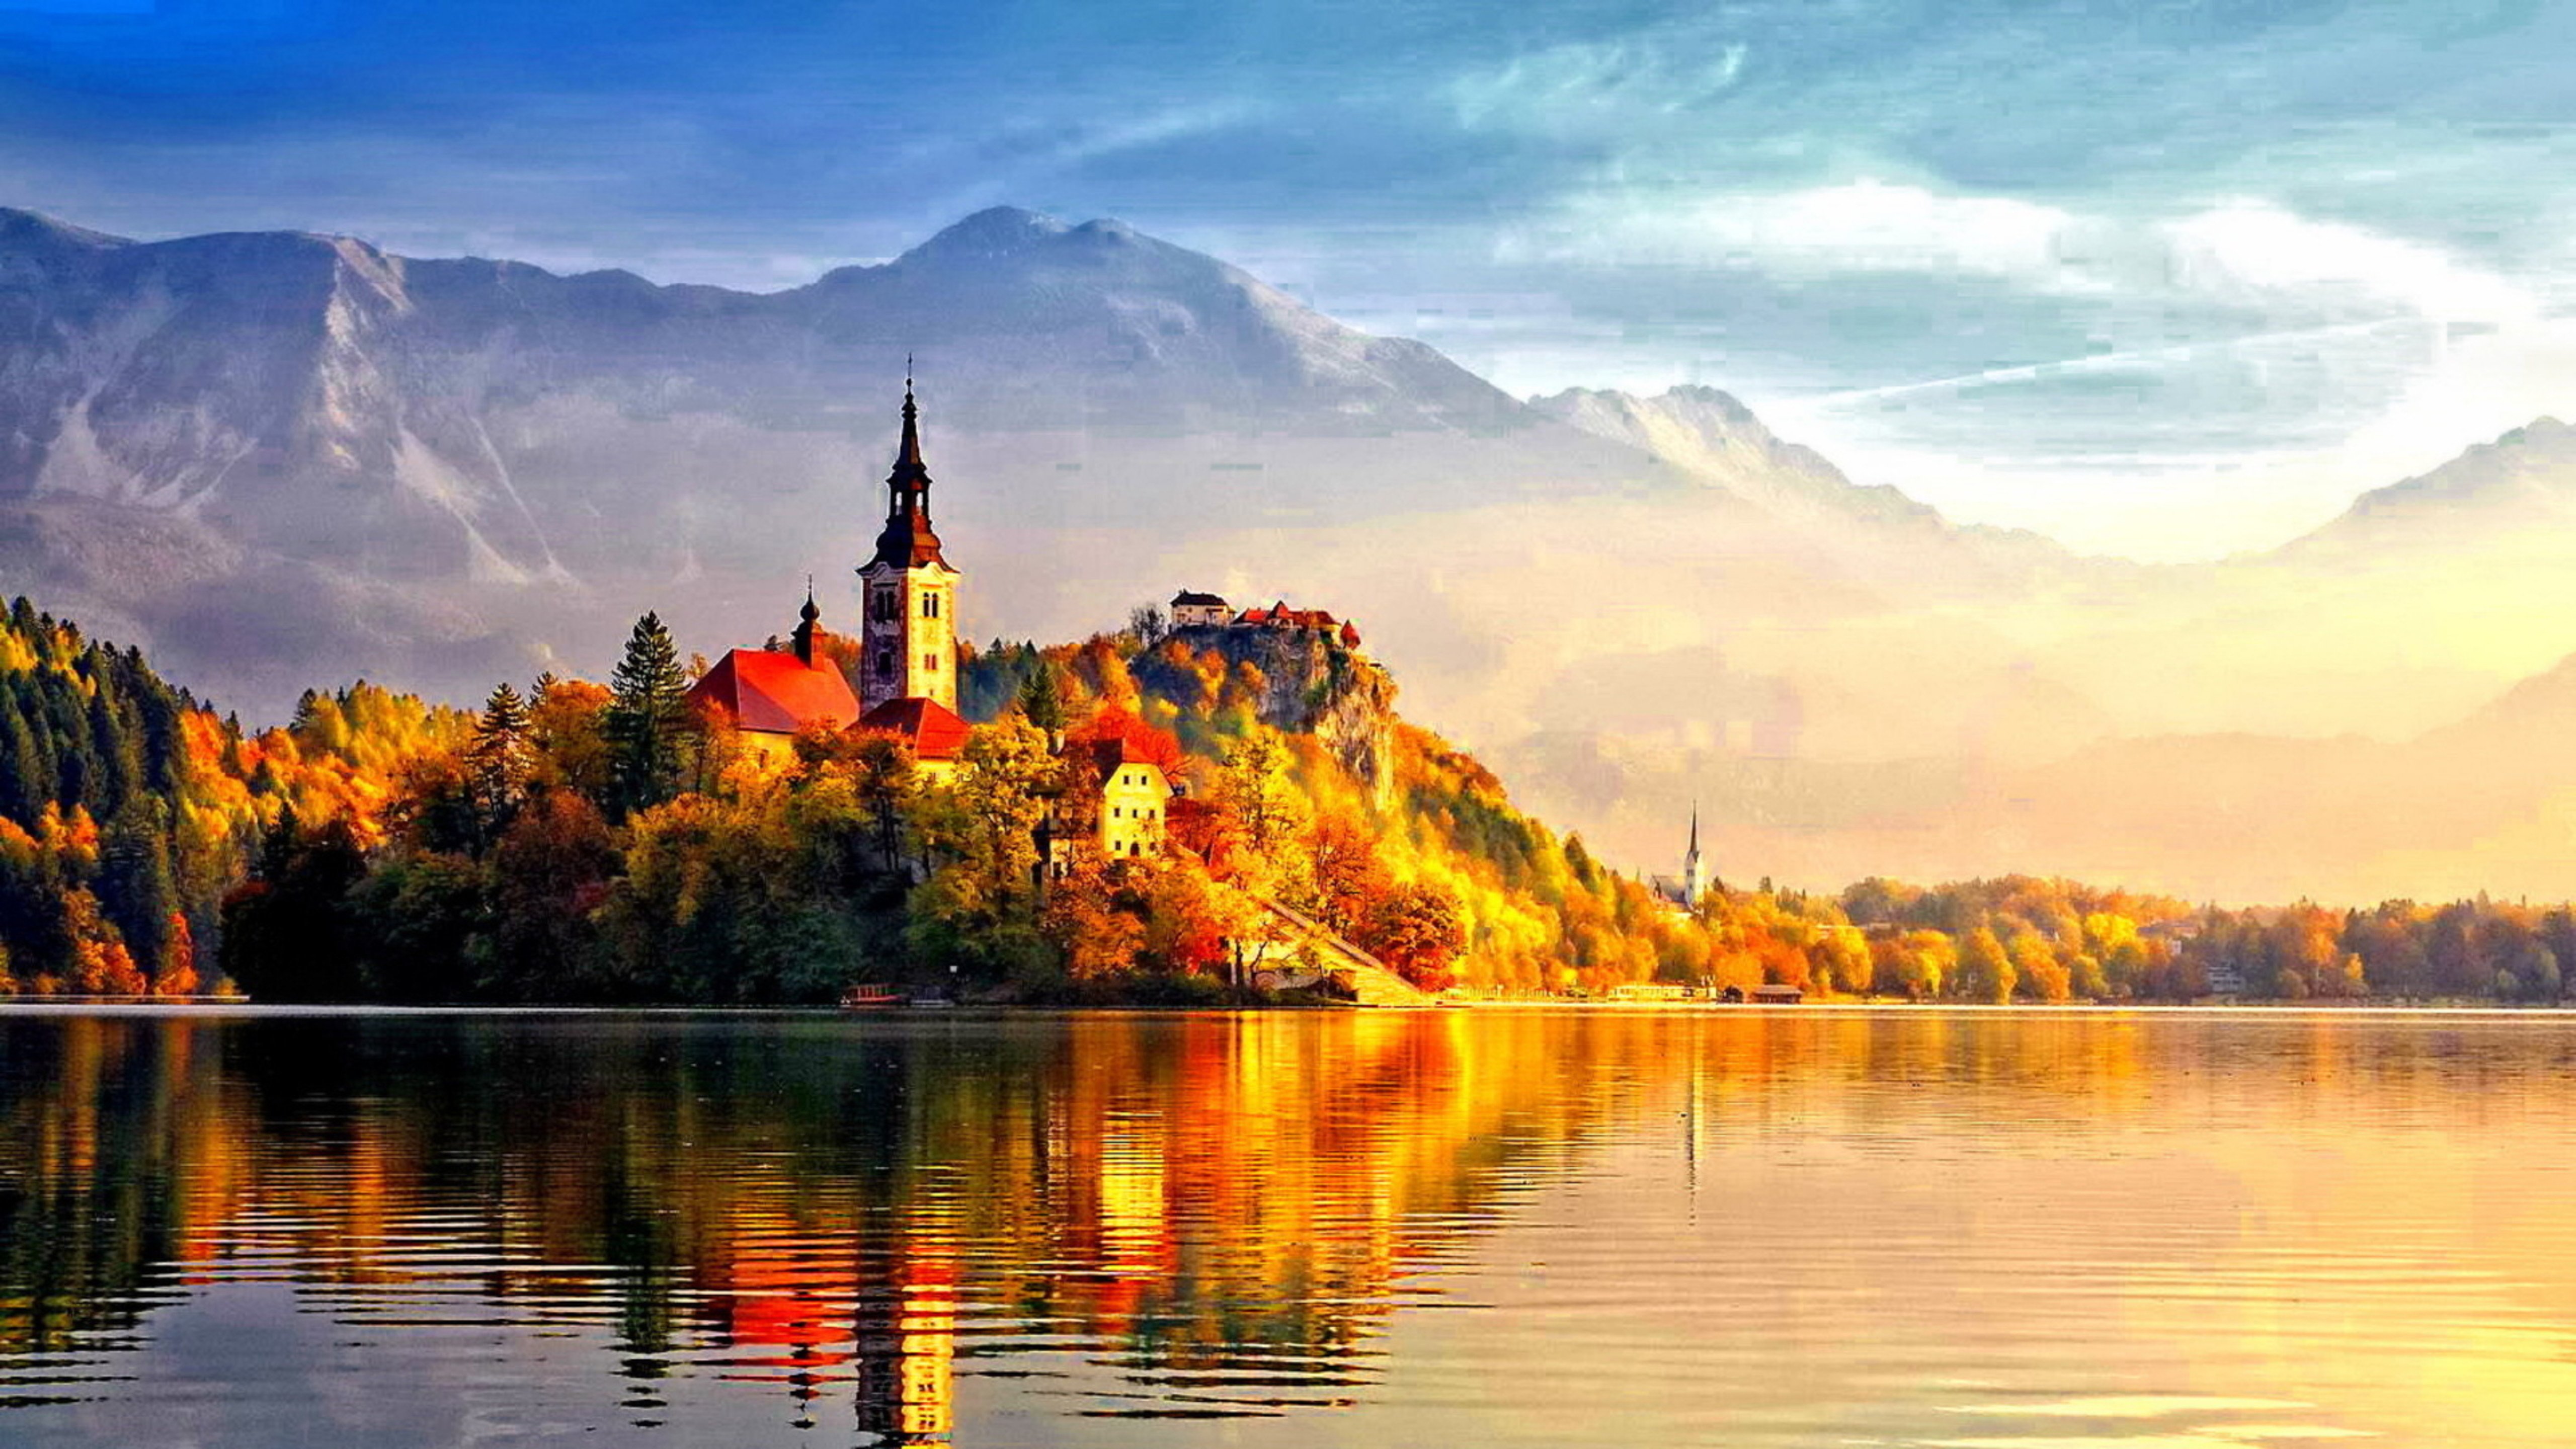 Autumn is beautiful. Озеро Блед осень. Озеро Блед осенью. Озеро Блед Словения осень. Словения река Блед.